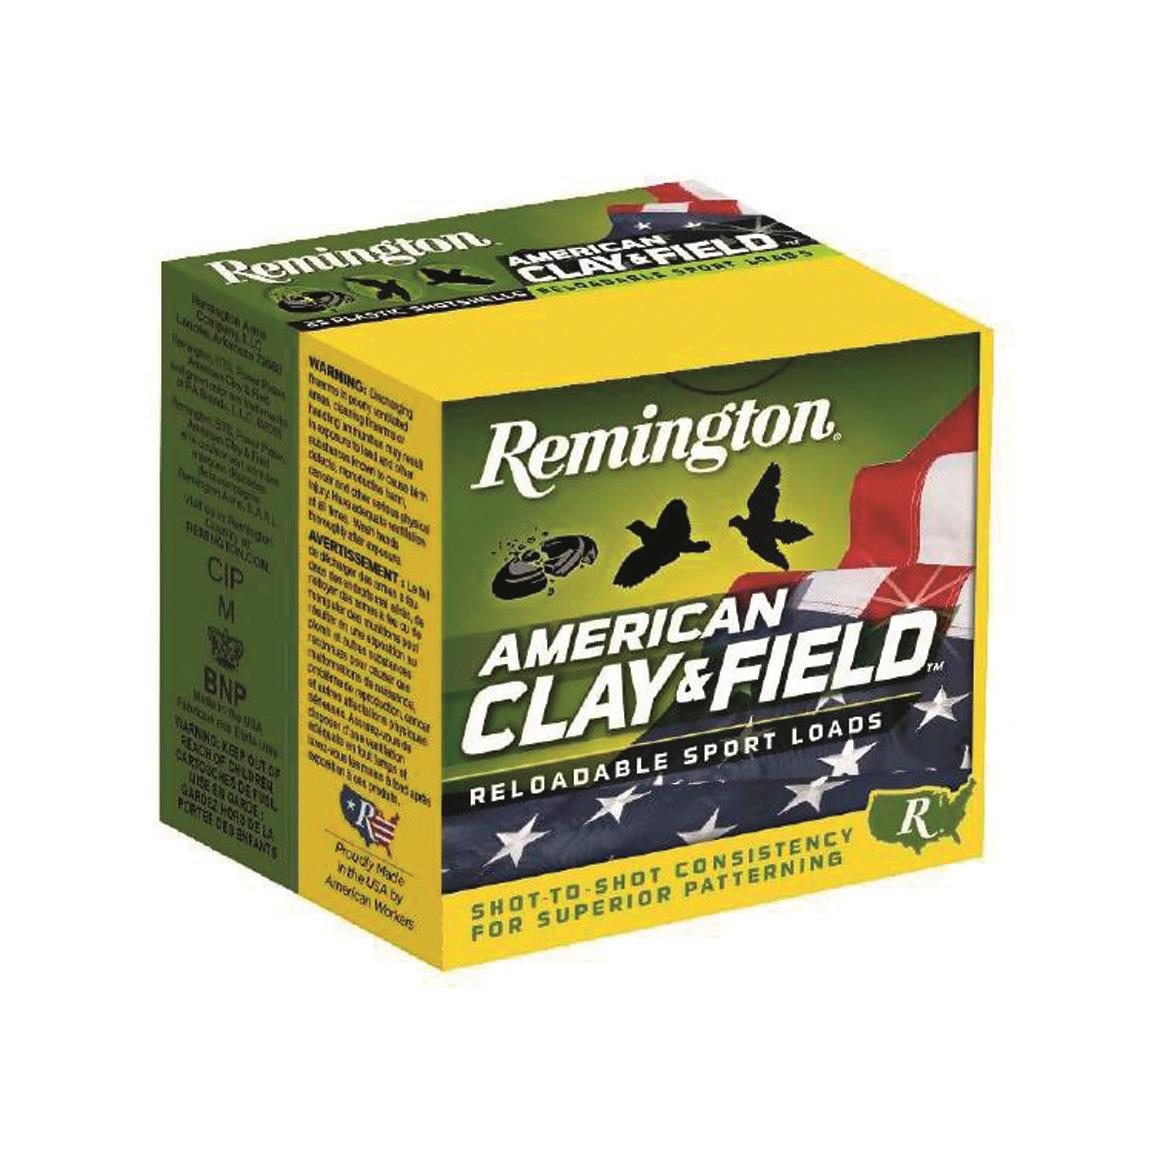 Remington American Clay & Field Sport Loads, 20 Gauge, 2 3/4" Shot Shells,  7/8 oz., 250 Rounds